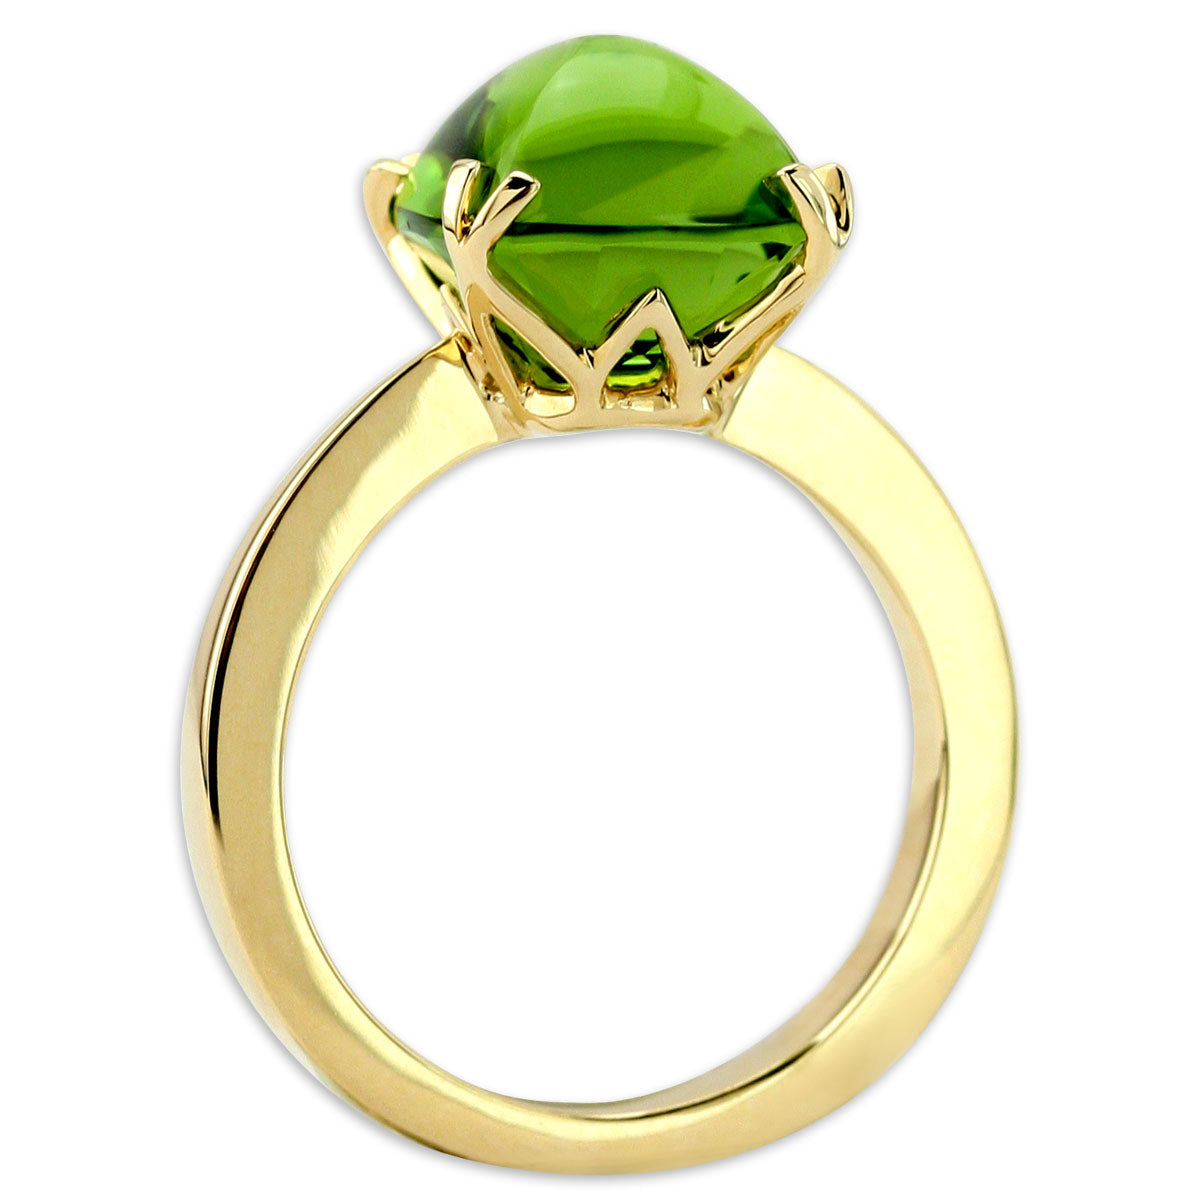 Green Mini Jelly Bean Ring-338654